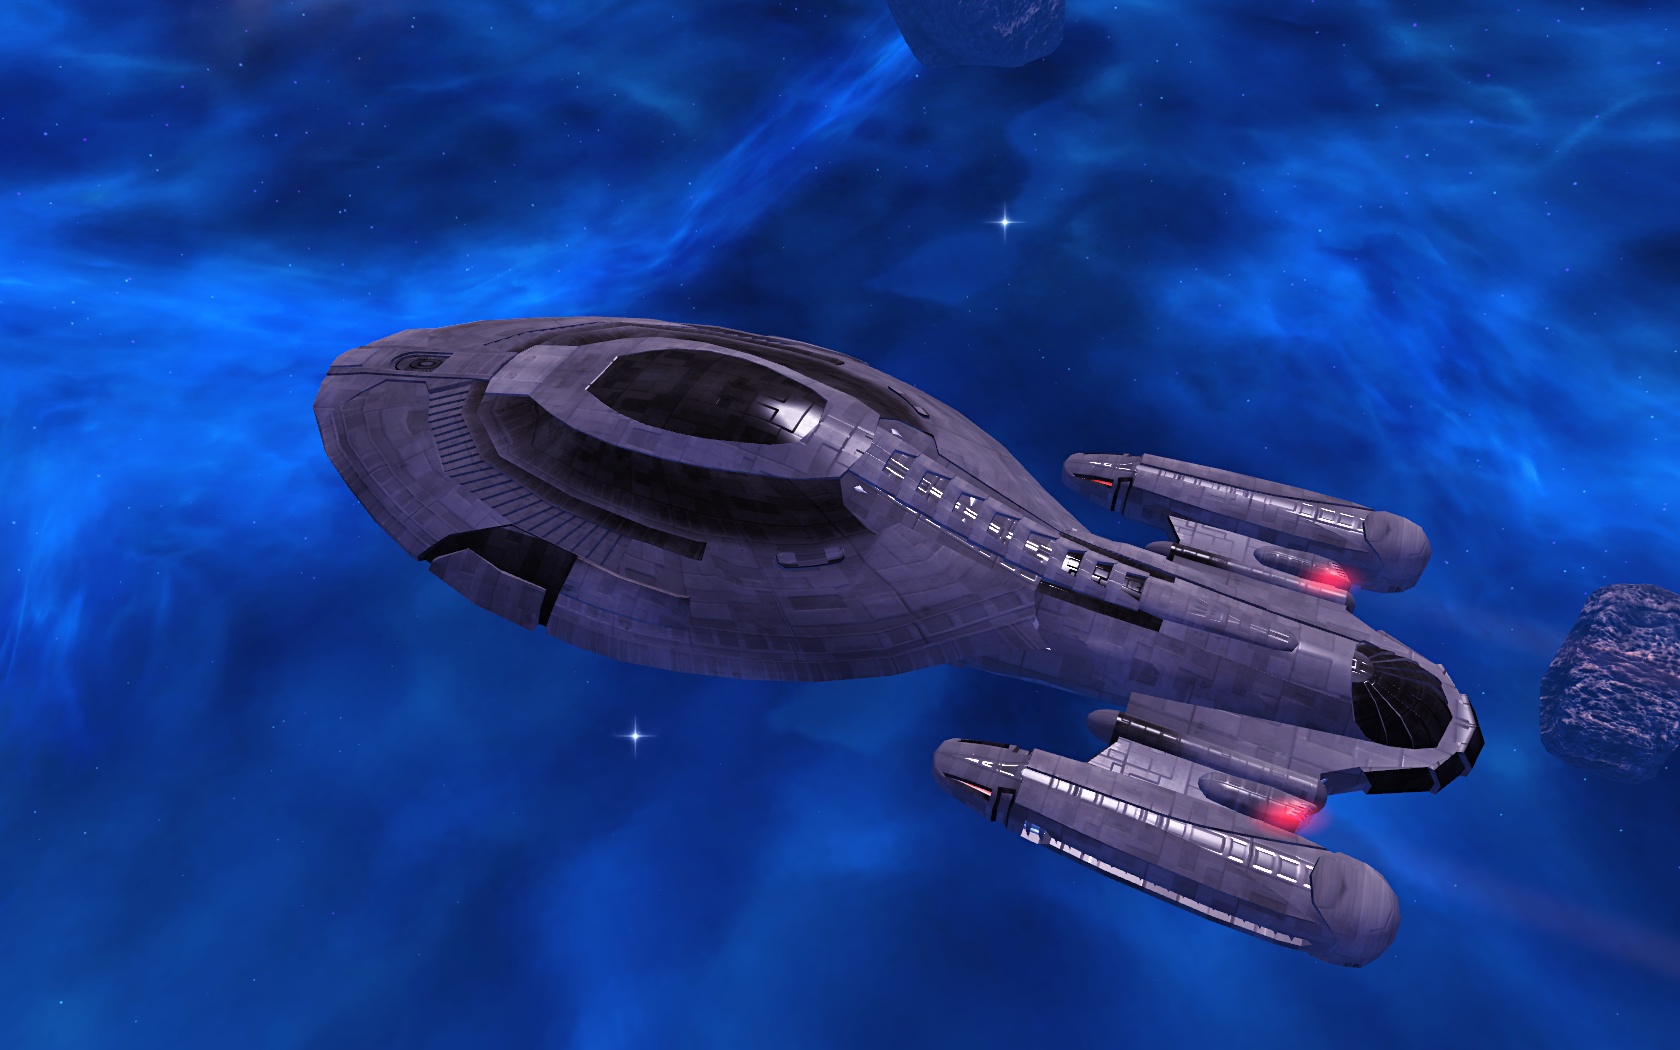 USS Icarus in the Azure Nebula